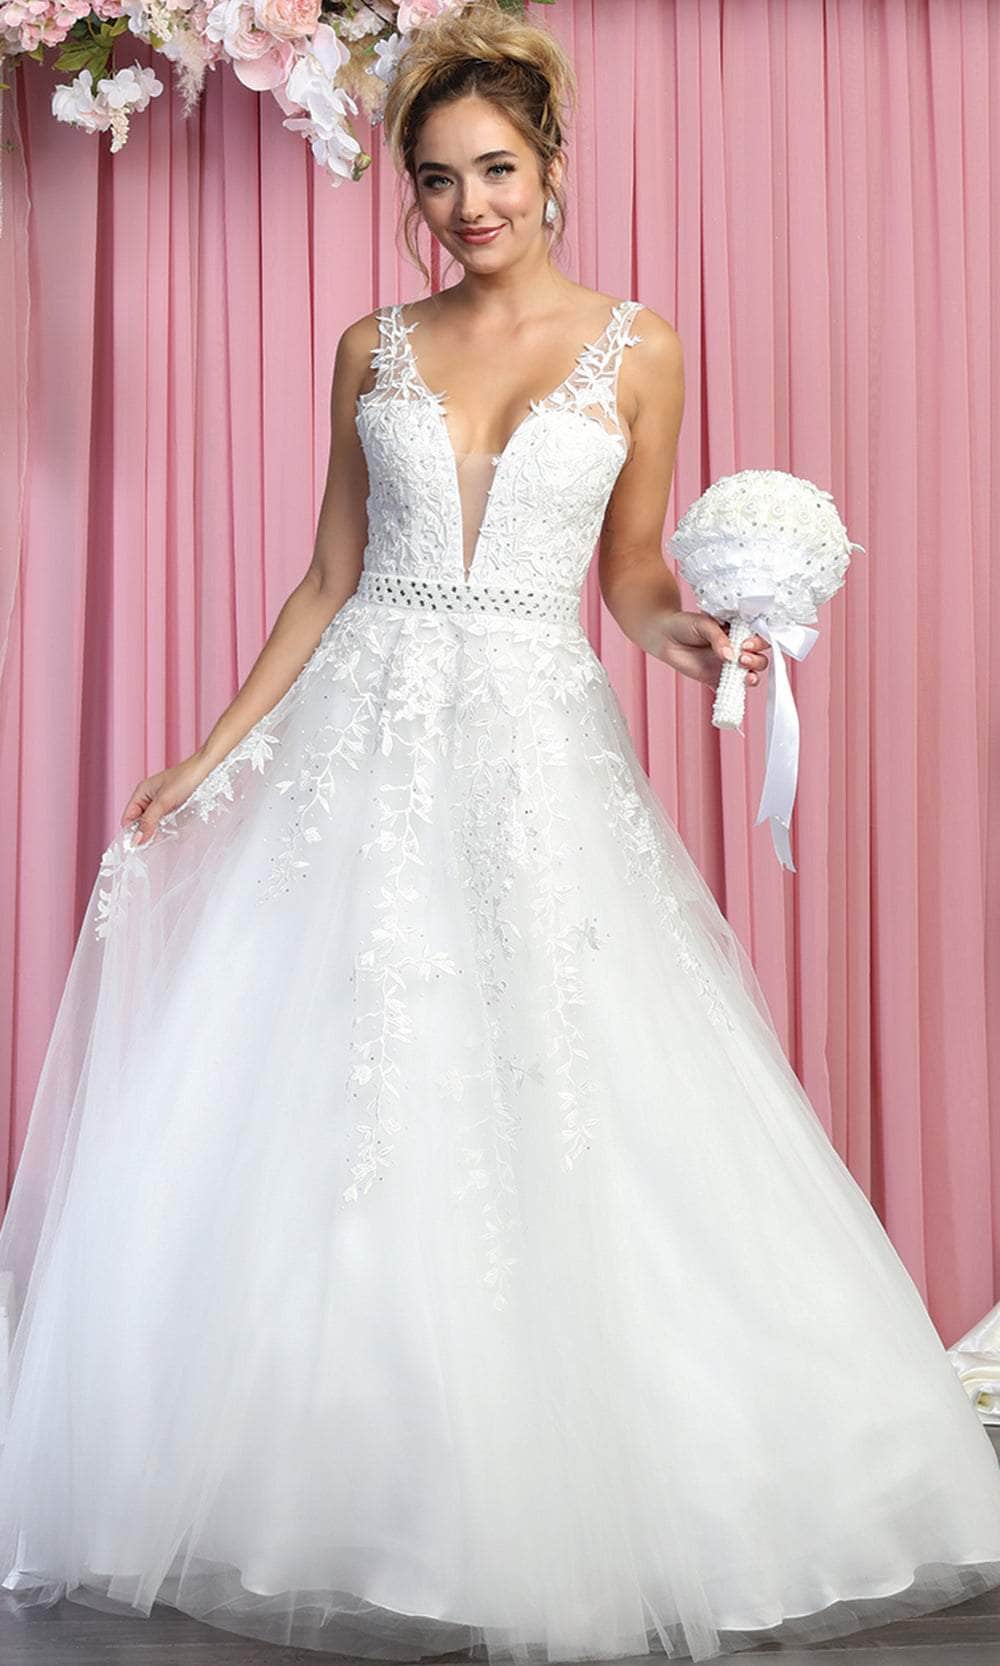 May Queen RQ7903 - Sleeveless Deep V-neck Wedding Dress
